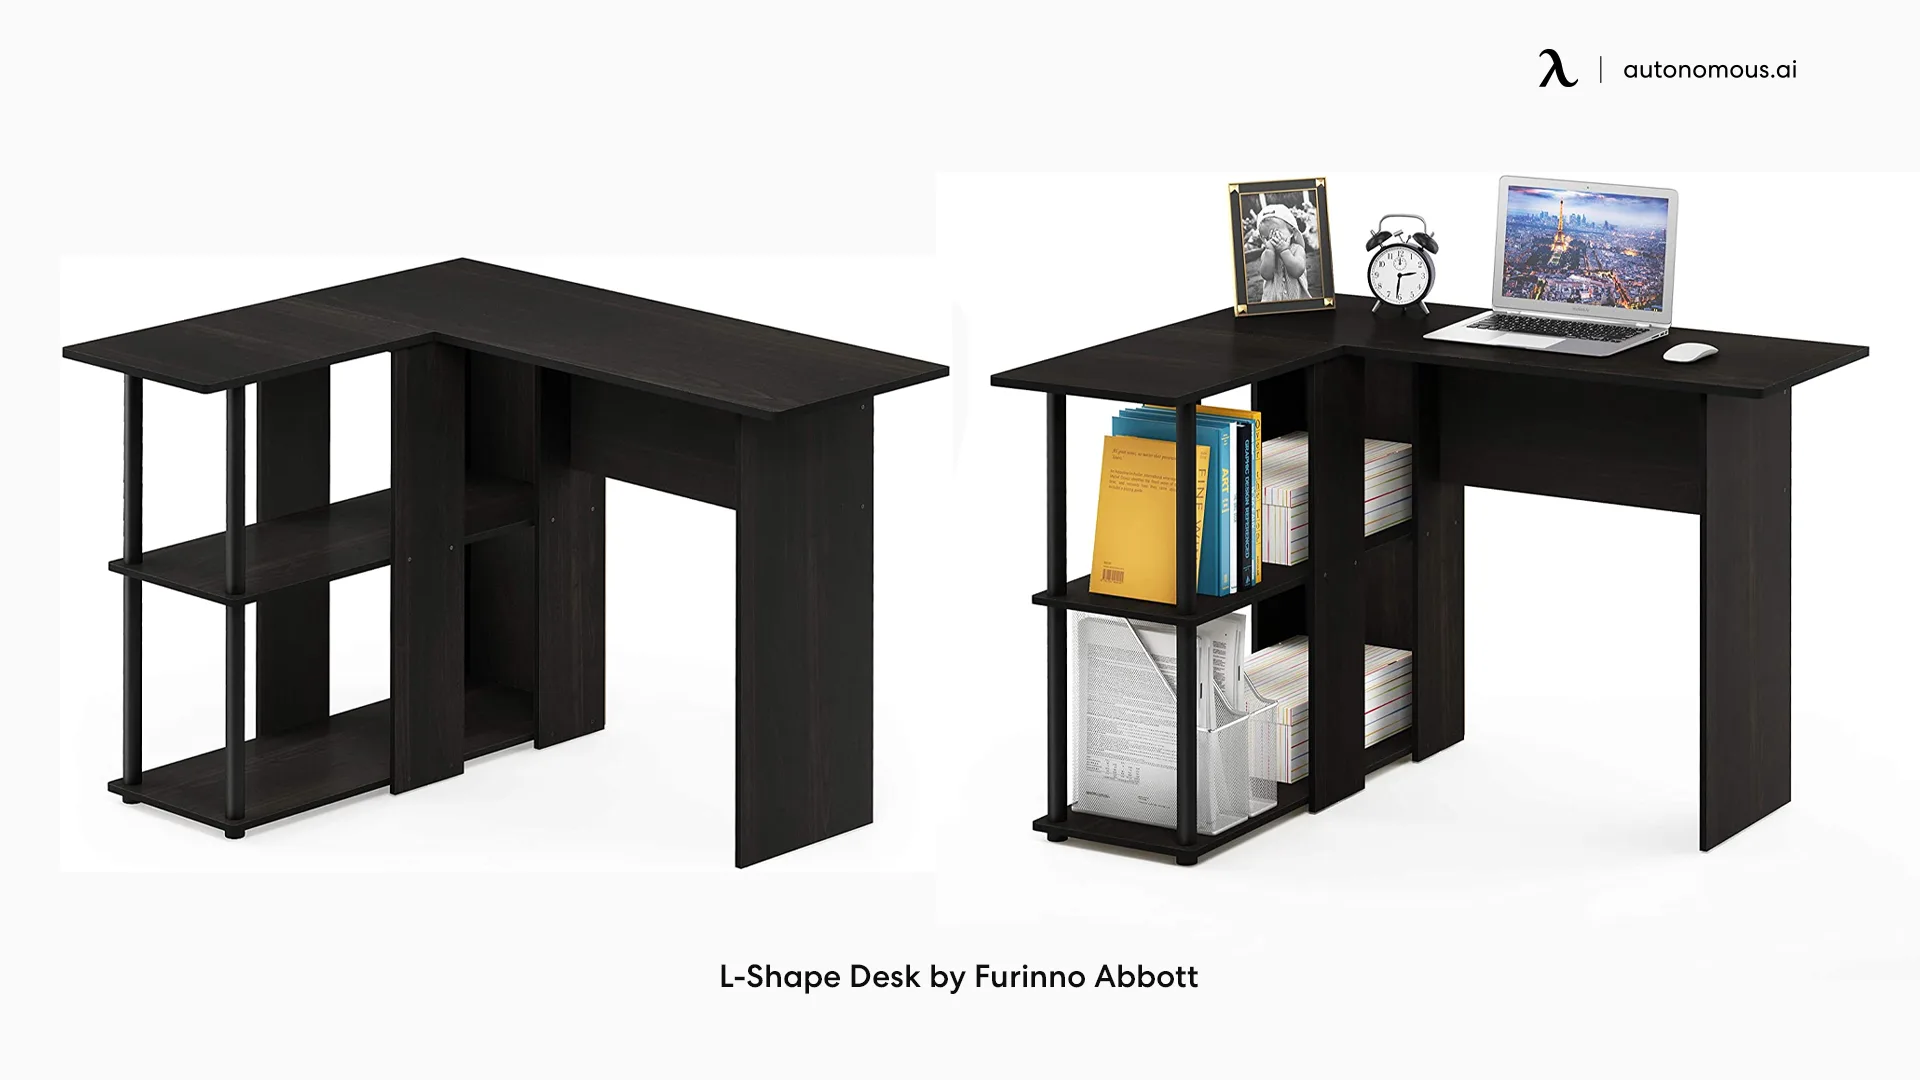 L-Shape Desk by Furinno Abbott